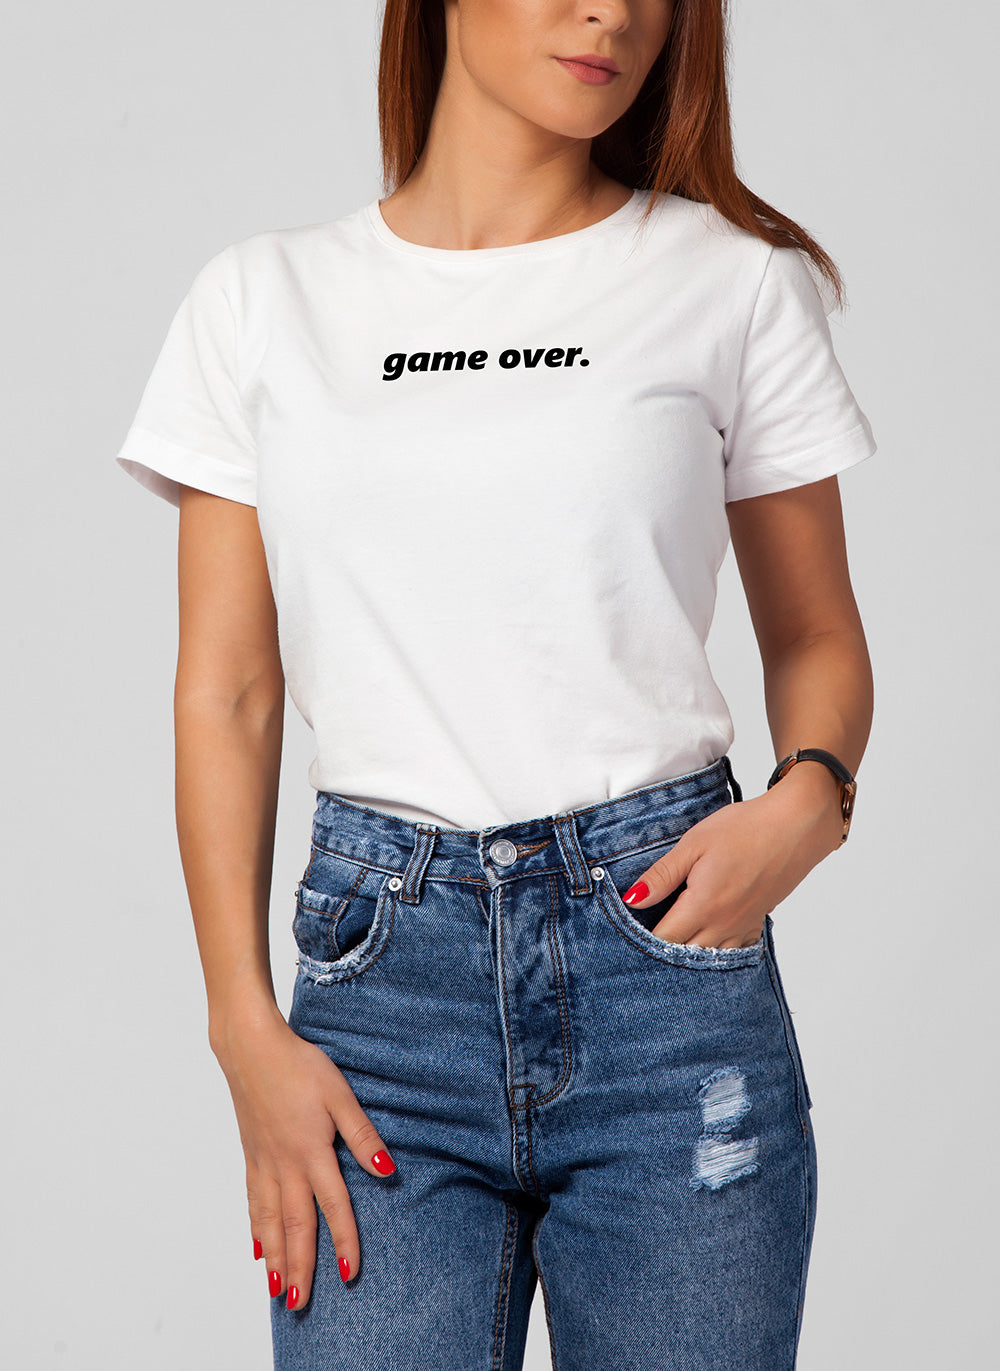 Game Over Women's T-shirt